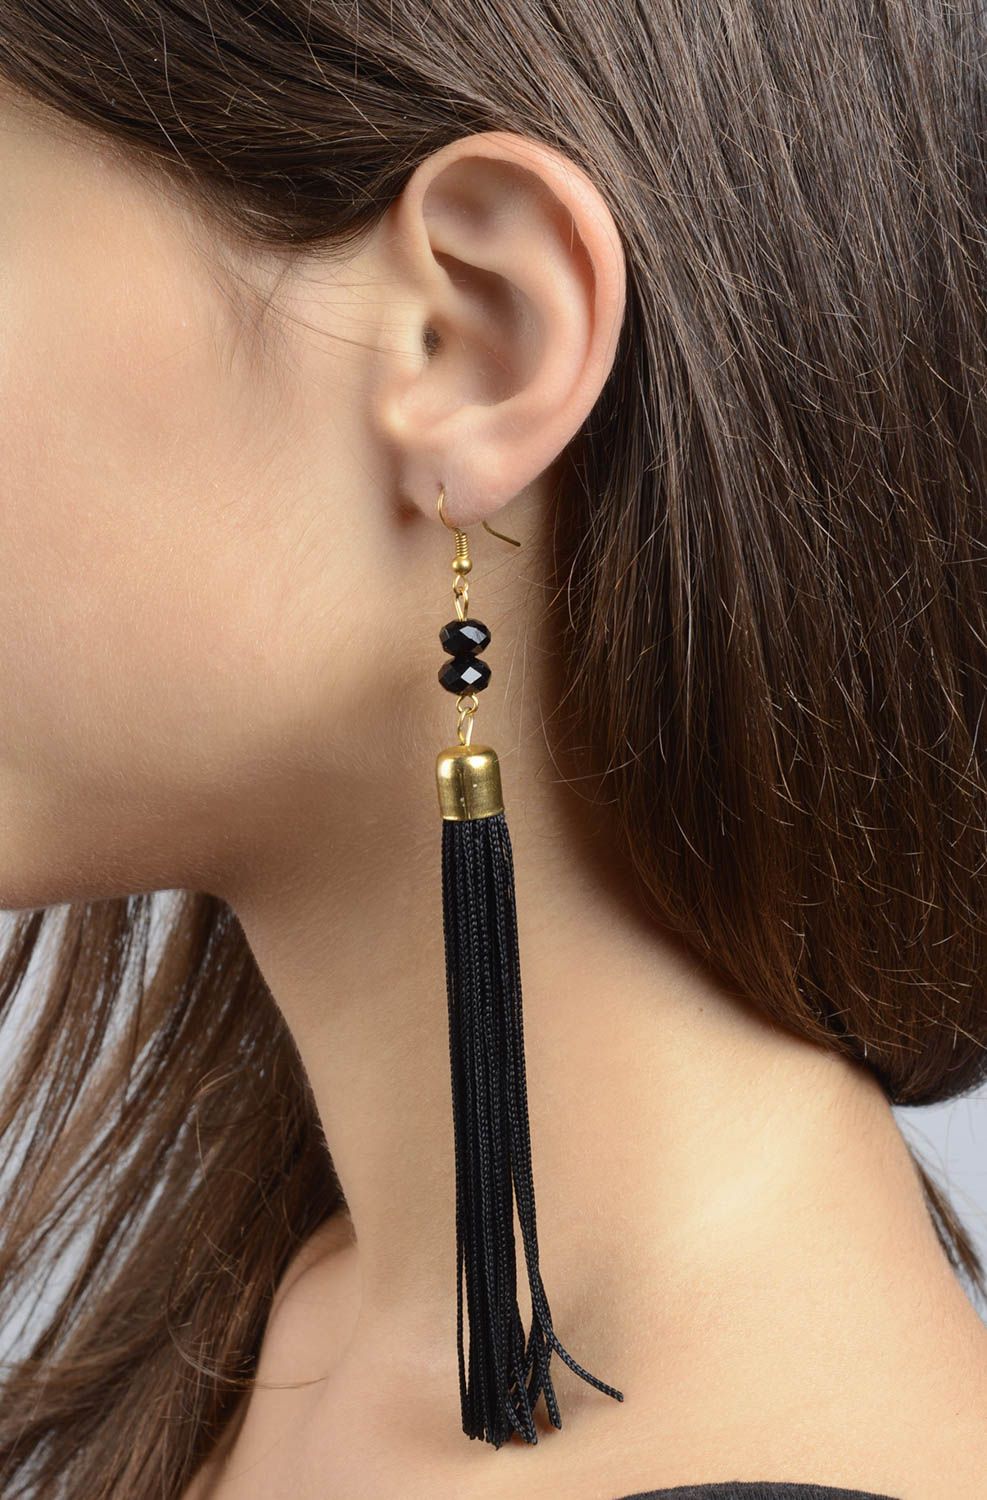 Handmade jewelry long earrings dangling earrings fashion accessories gift ideas photo 5